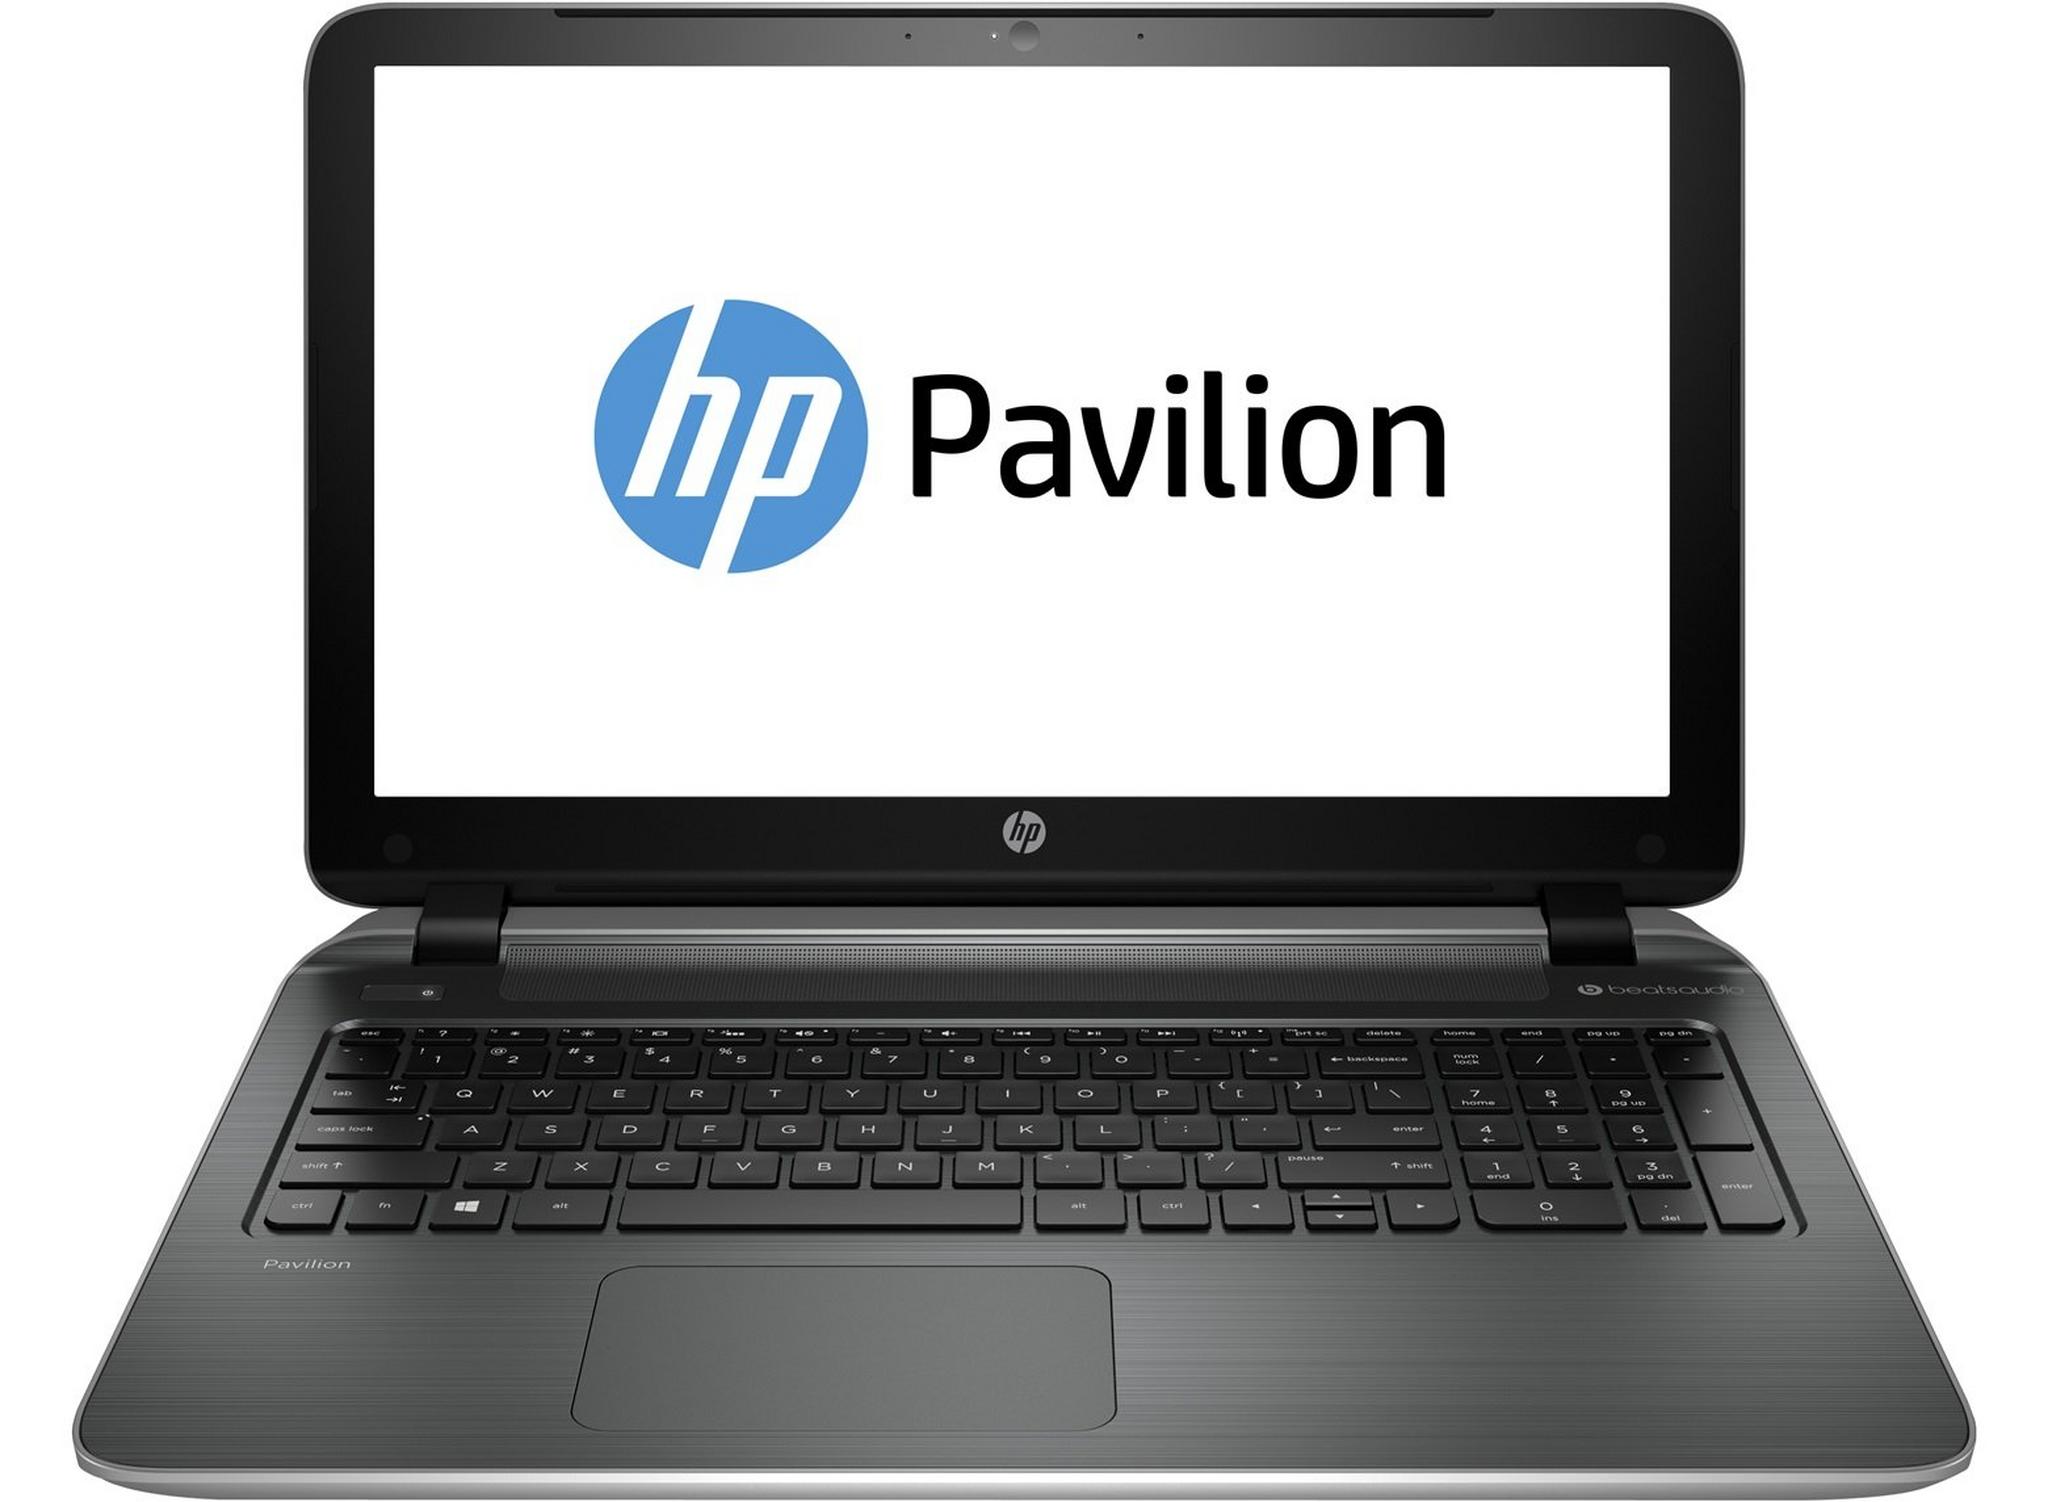 HP Pavilion Core i7 16GB RAM 1TB HDD 15.6-inch Laptop - Silver